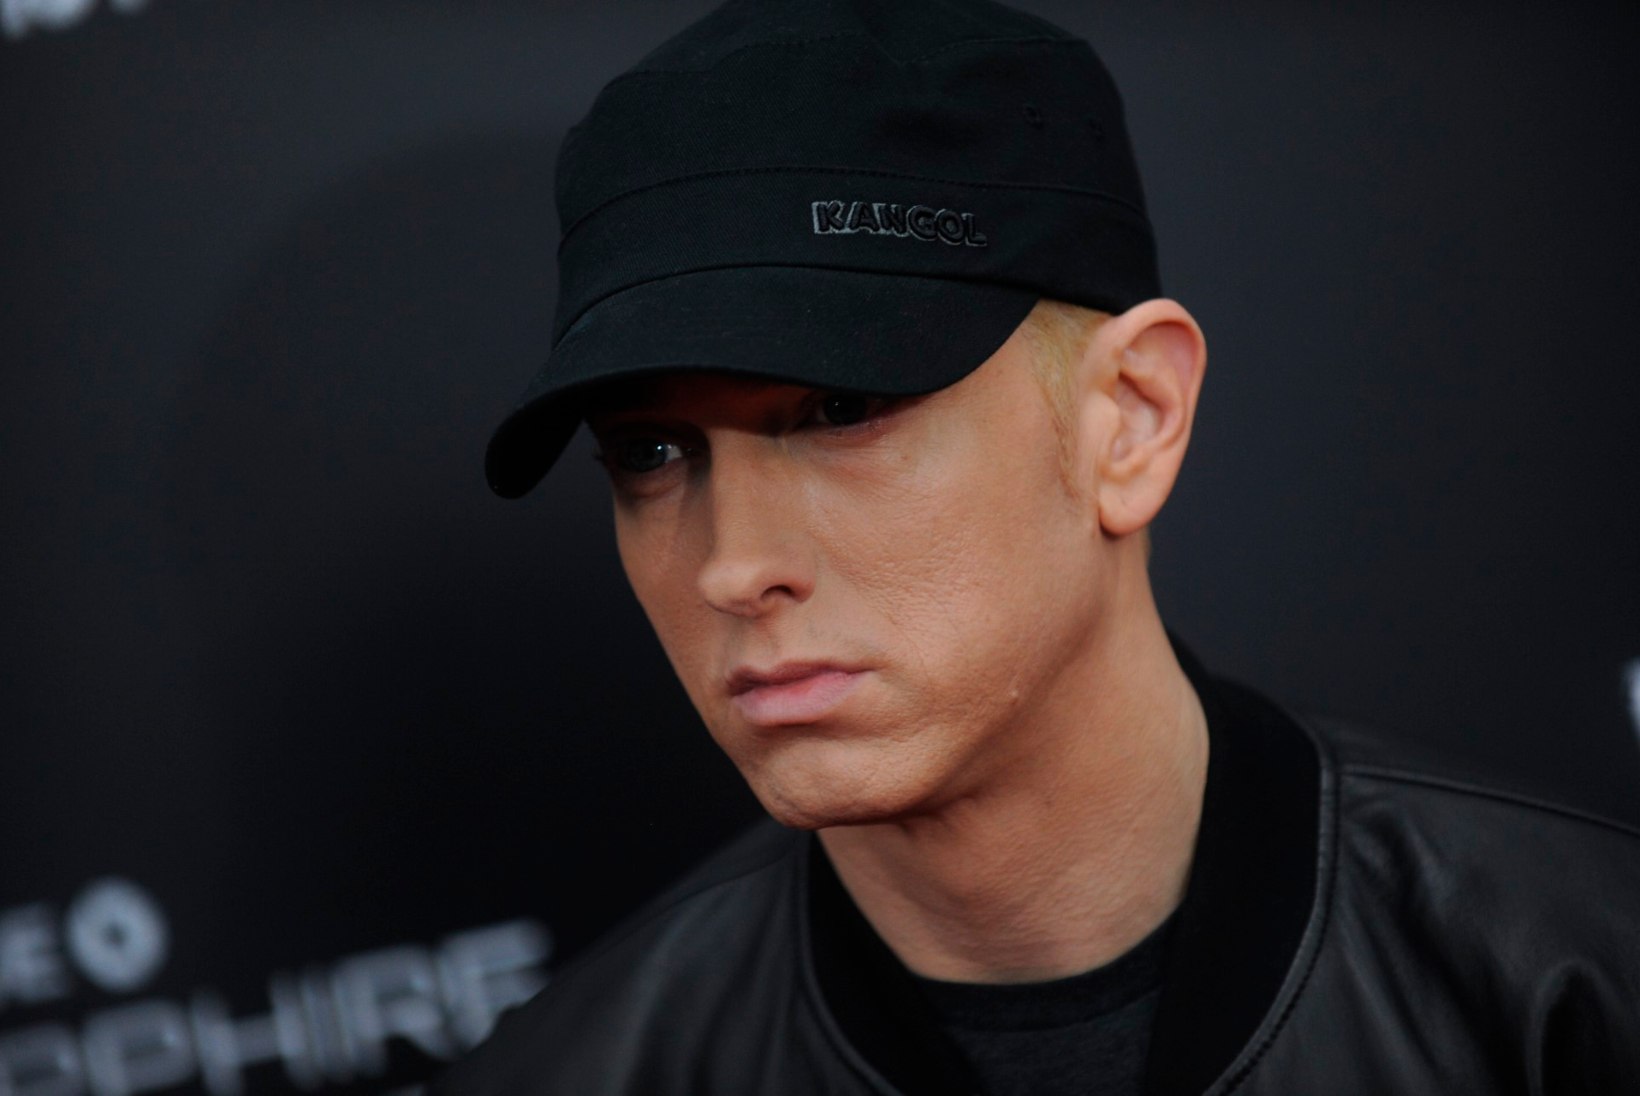 Leiti Eminemi eksnaise kaksikõe surnukeha